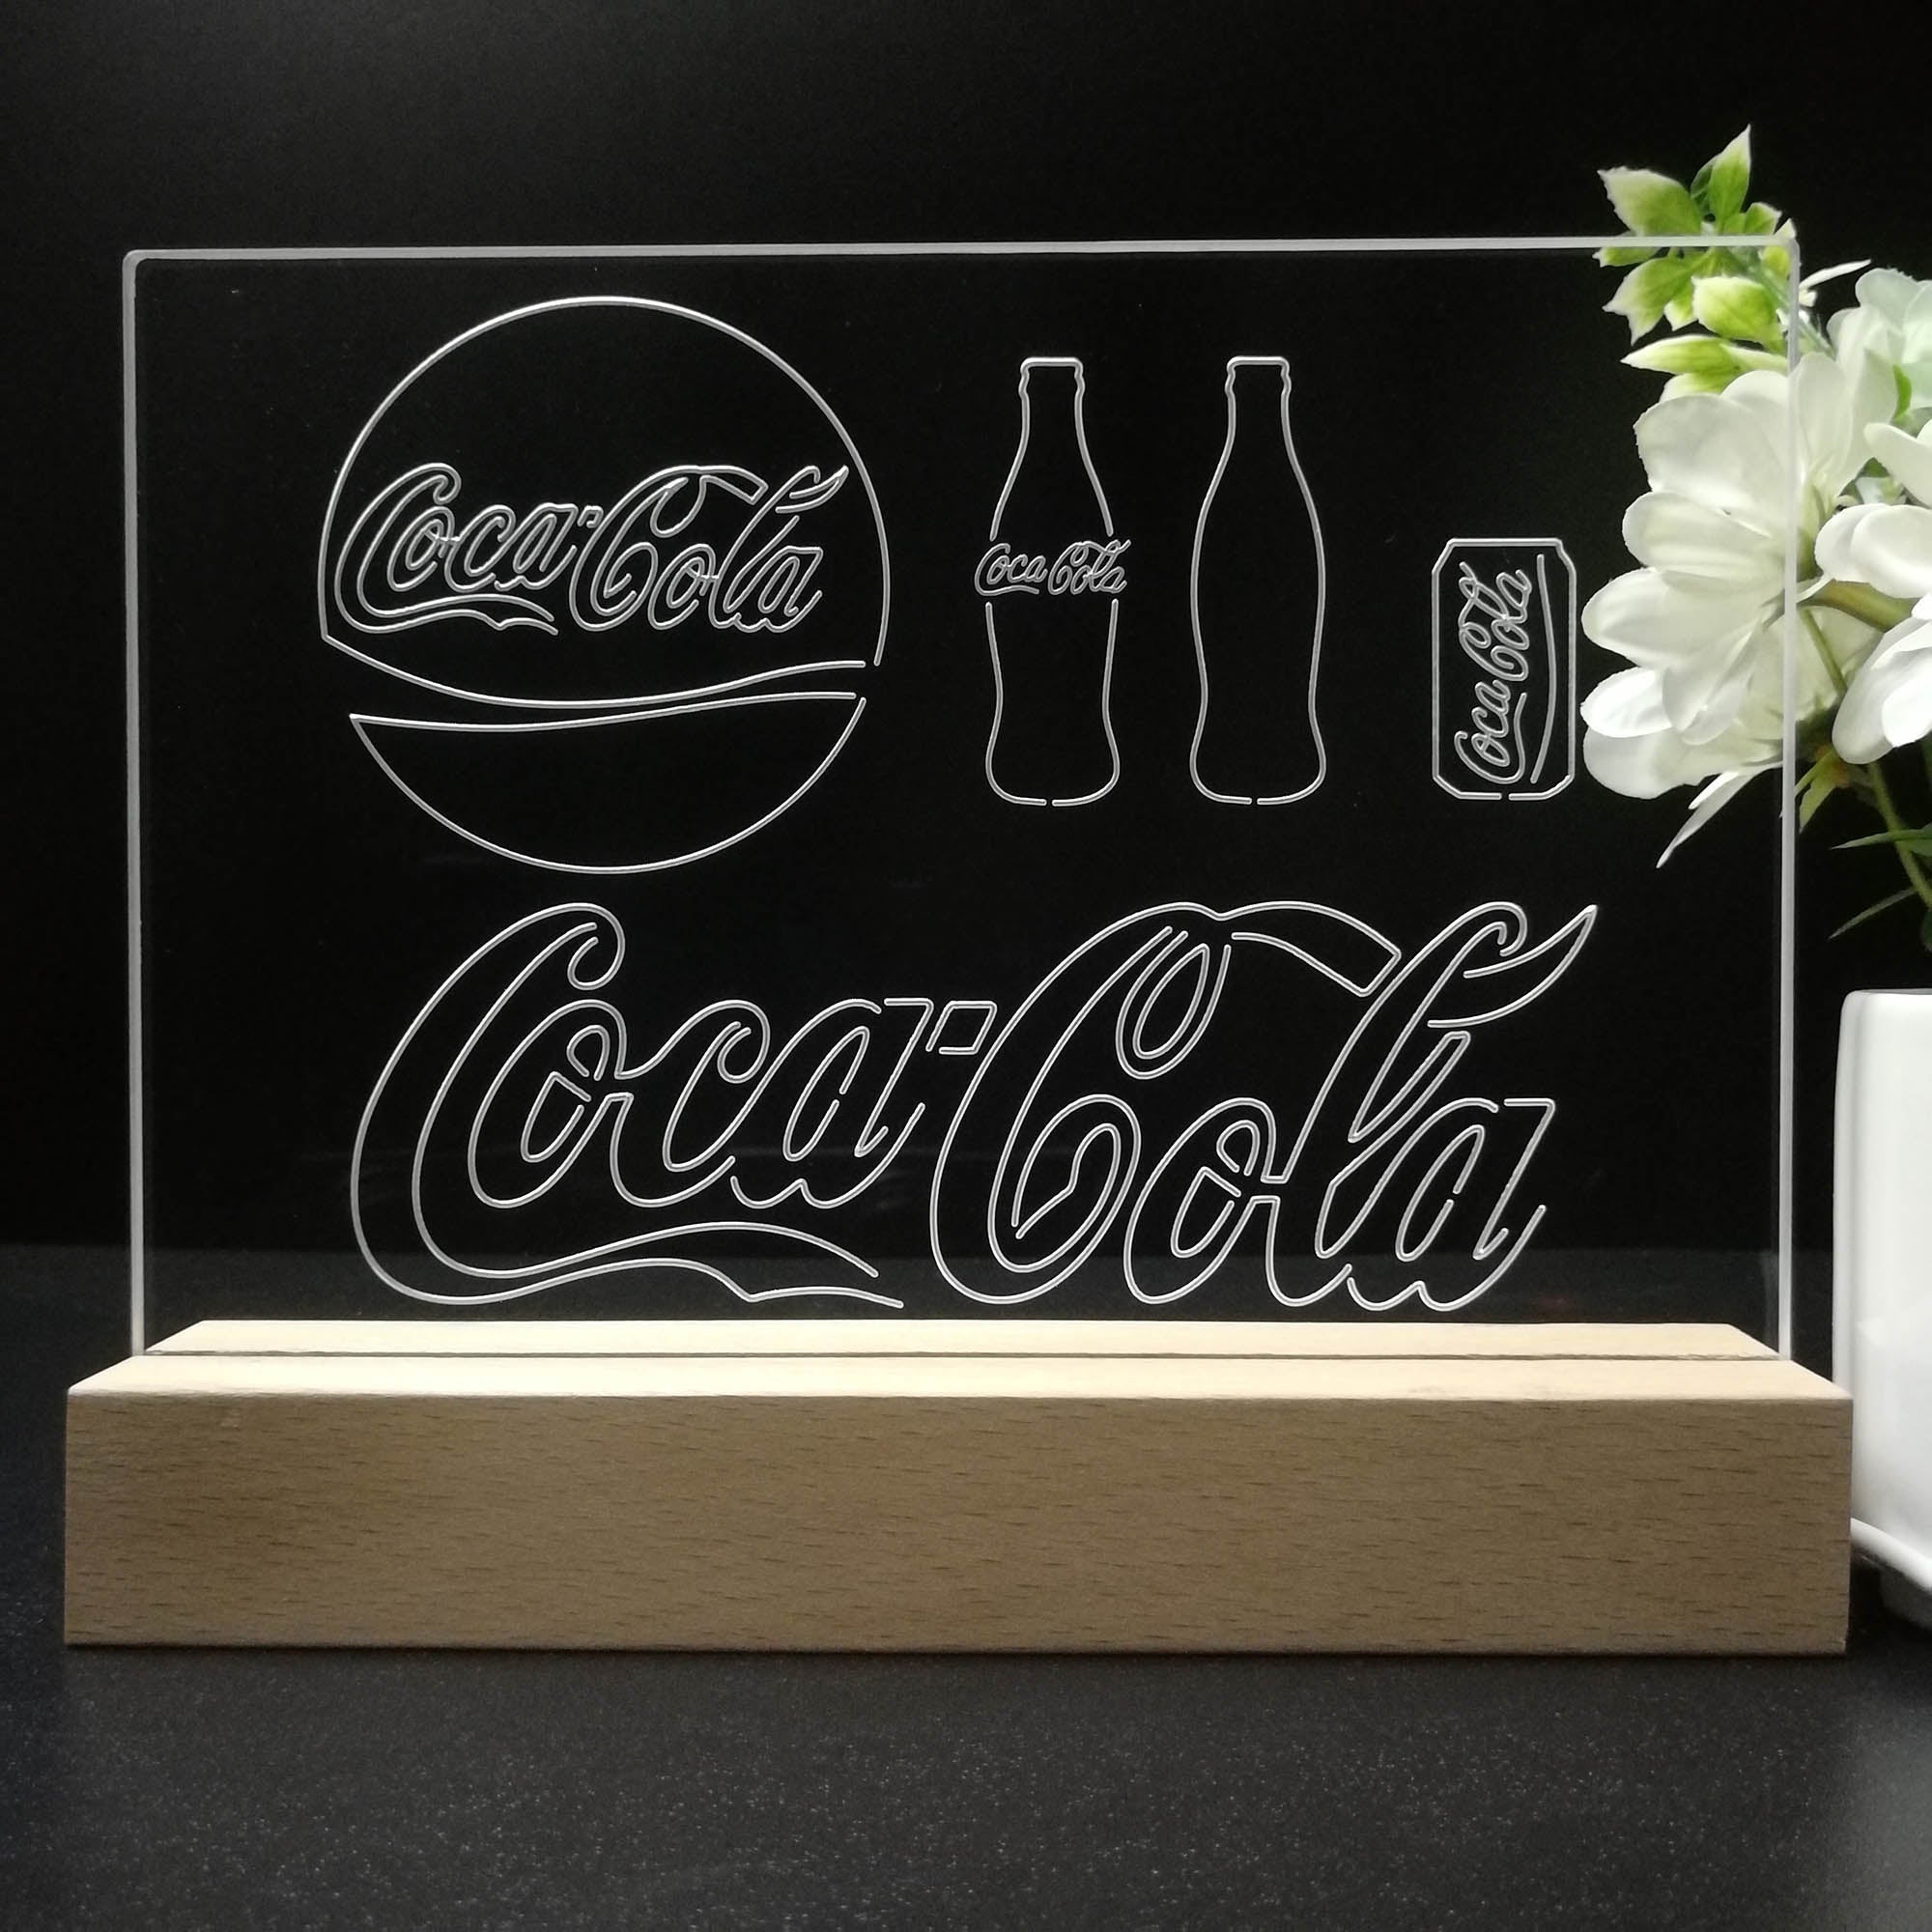 Coca Cola Merchandise Gift Neon Sign Pub Bar Decor Lamp